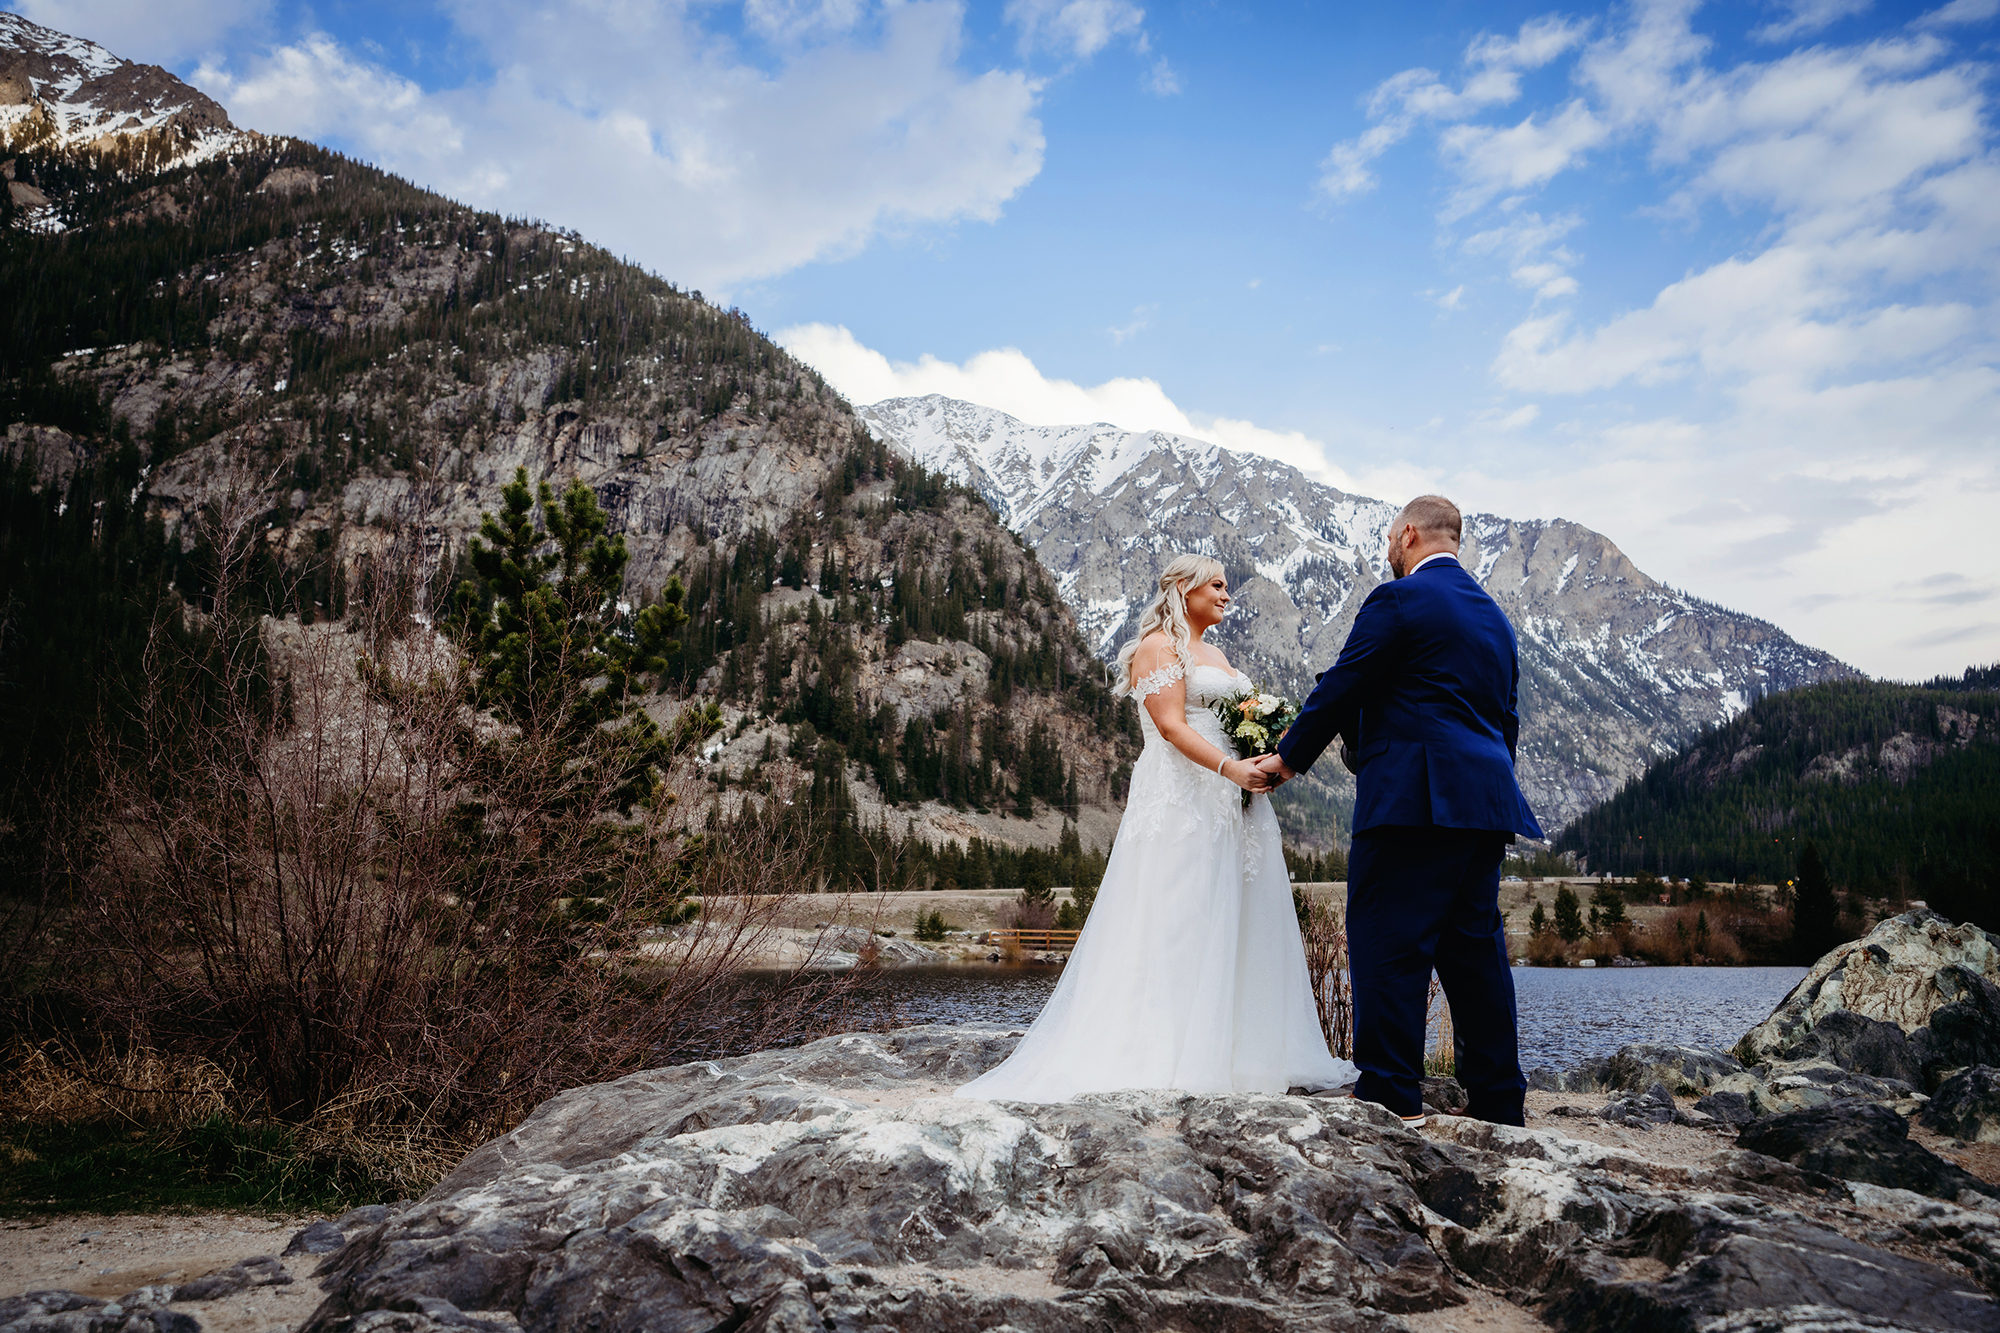 Colorado elopement photographer captures bride and groom holding hands during elopement ceremony